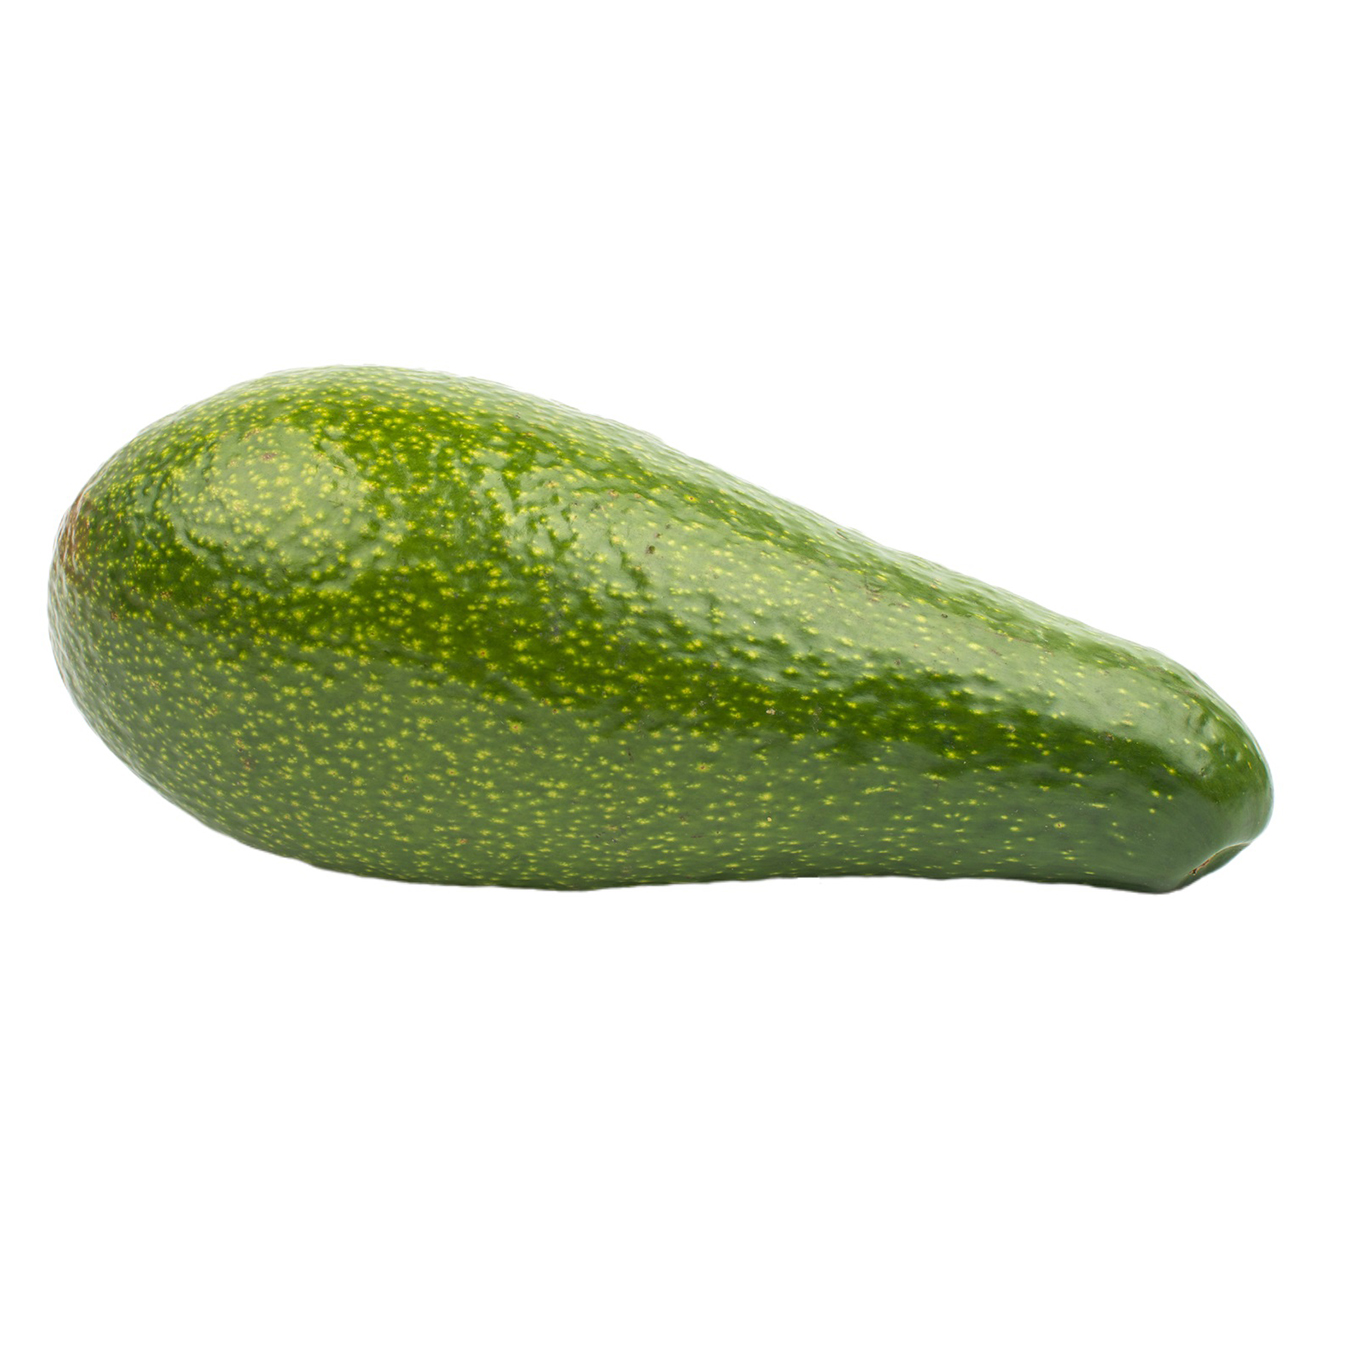 Small avocado pcs 2